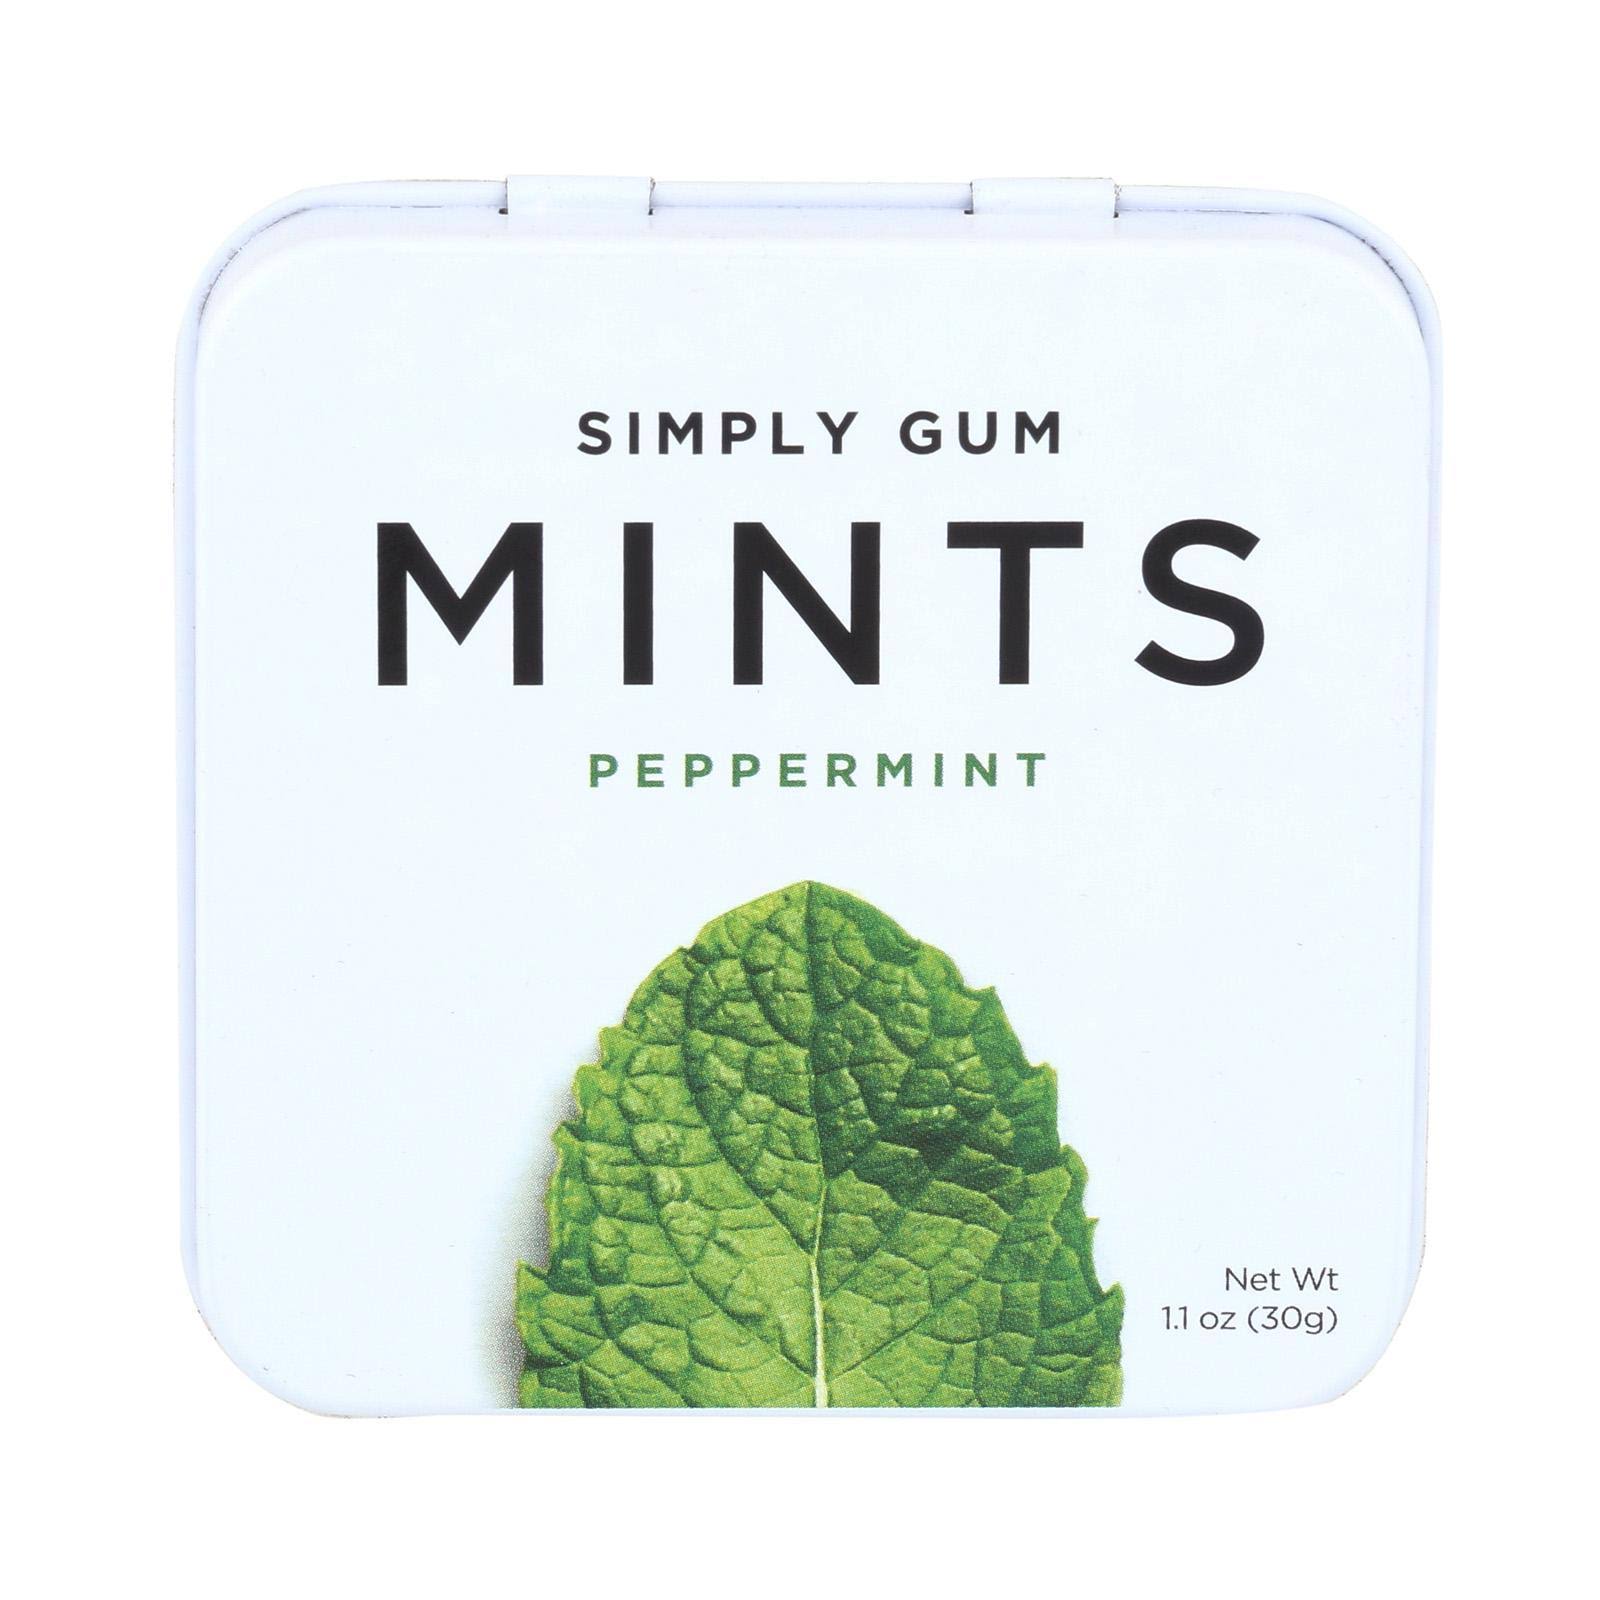 Simply Gum Breath Mints - Peppermint, 270ct